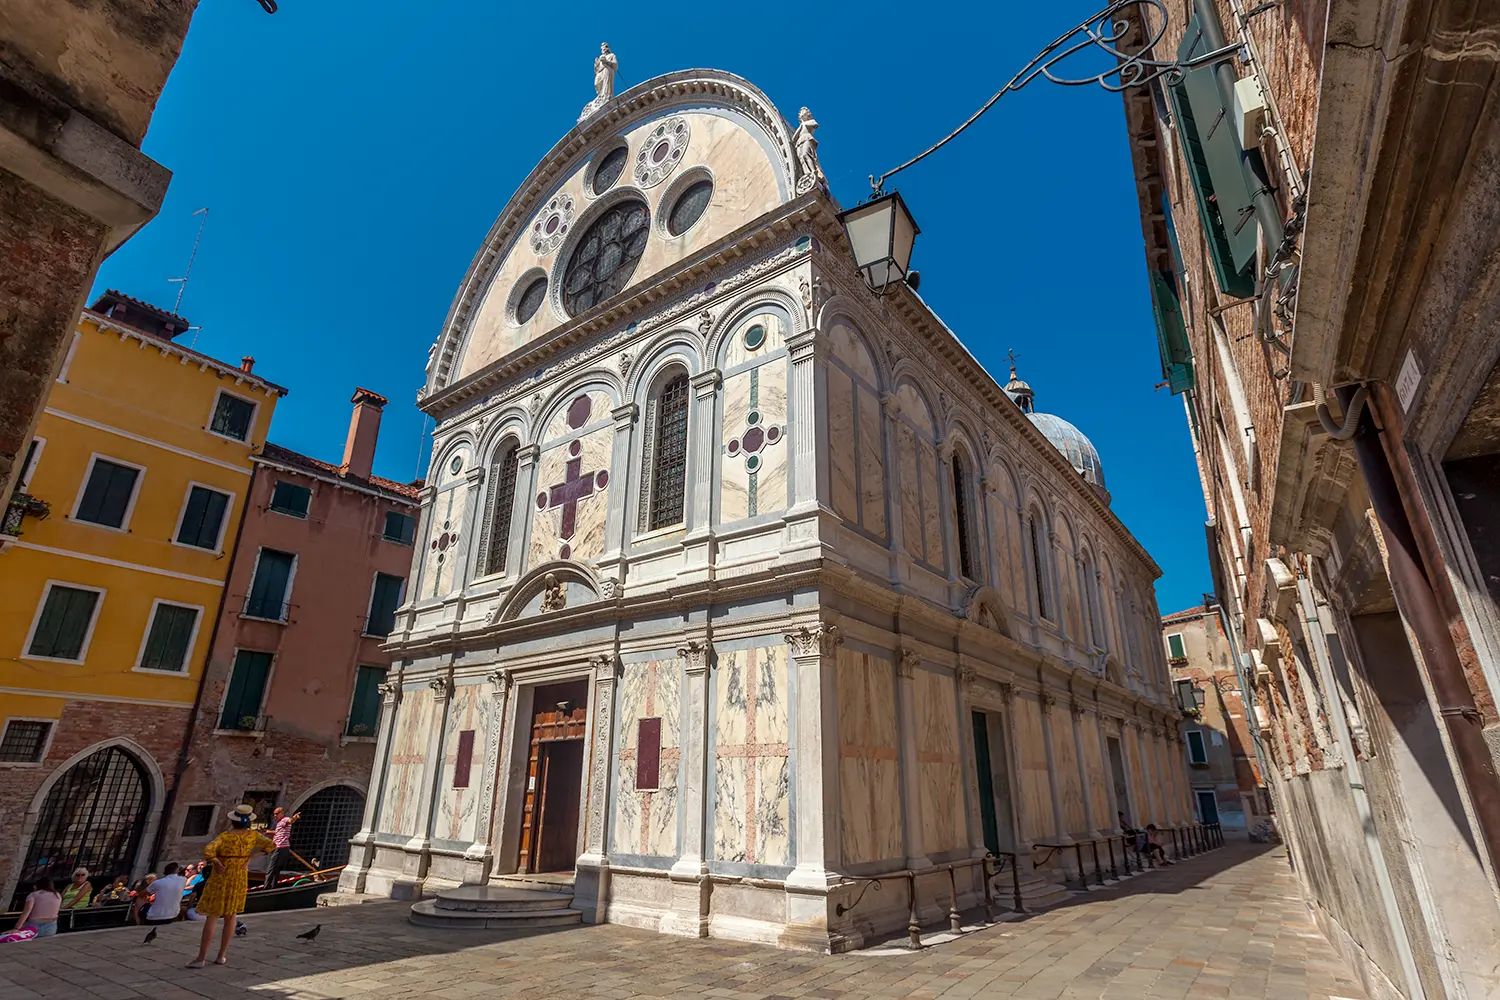 Church of Santa Maria dei Miracoli, historic building with marble walls in Venice, Italy